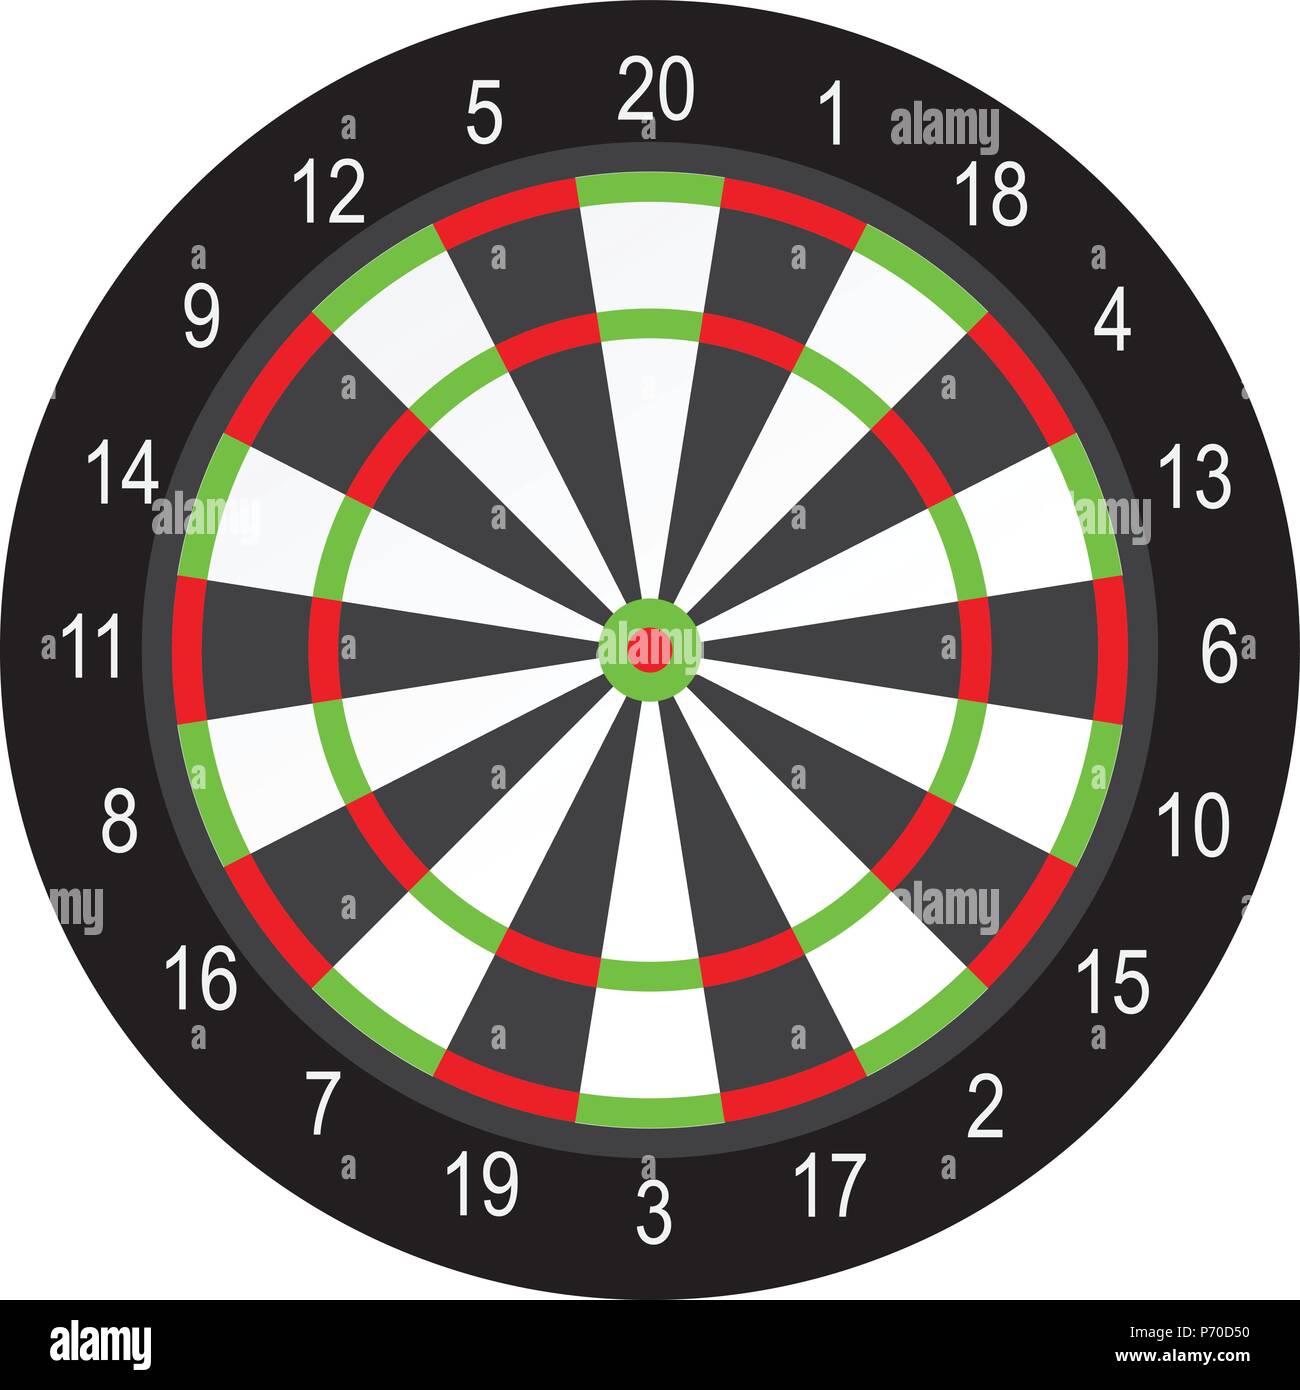 Dart board layout design - darts game Stock Vector Image & Art - Alamy